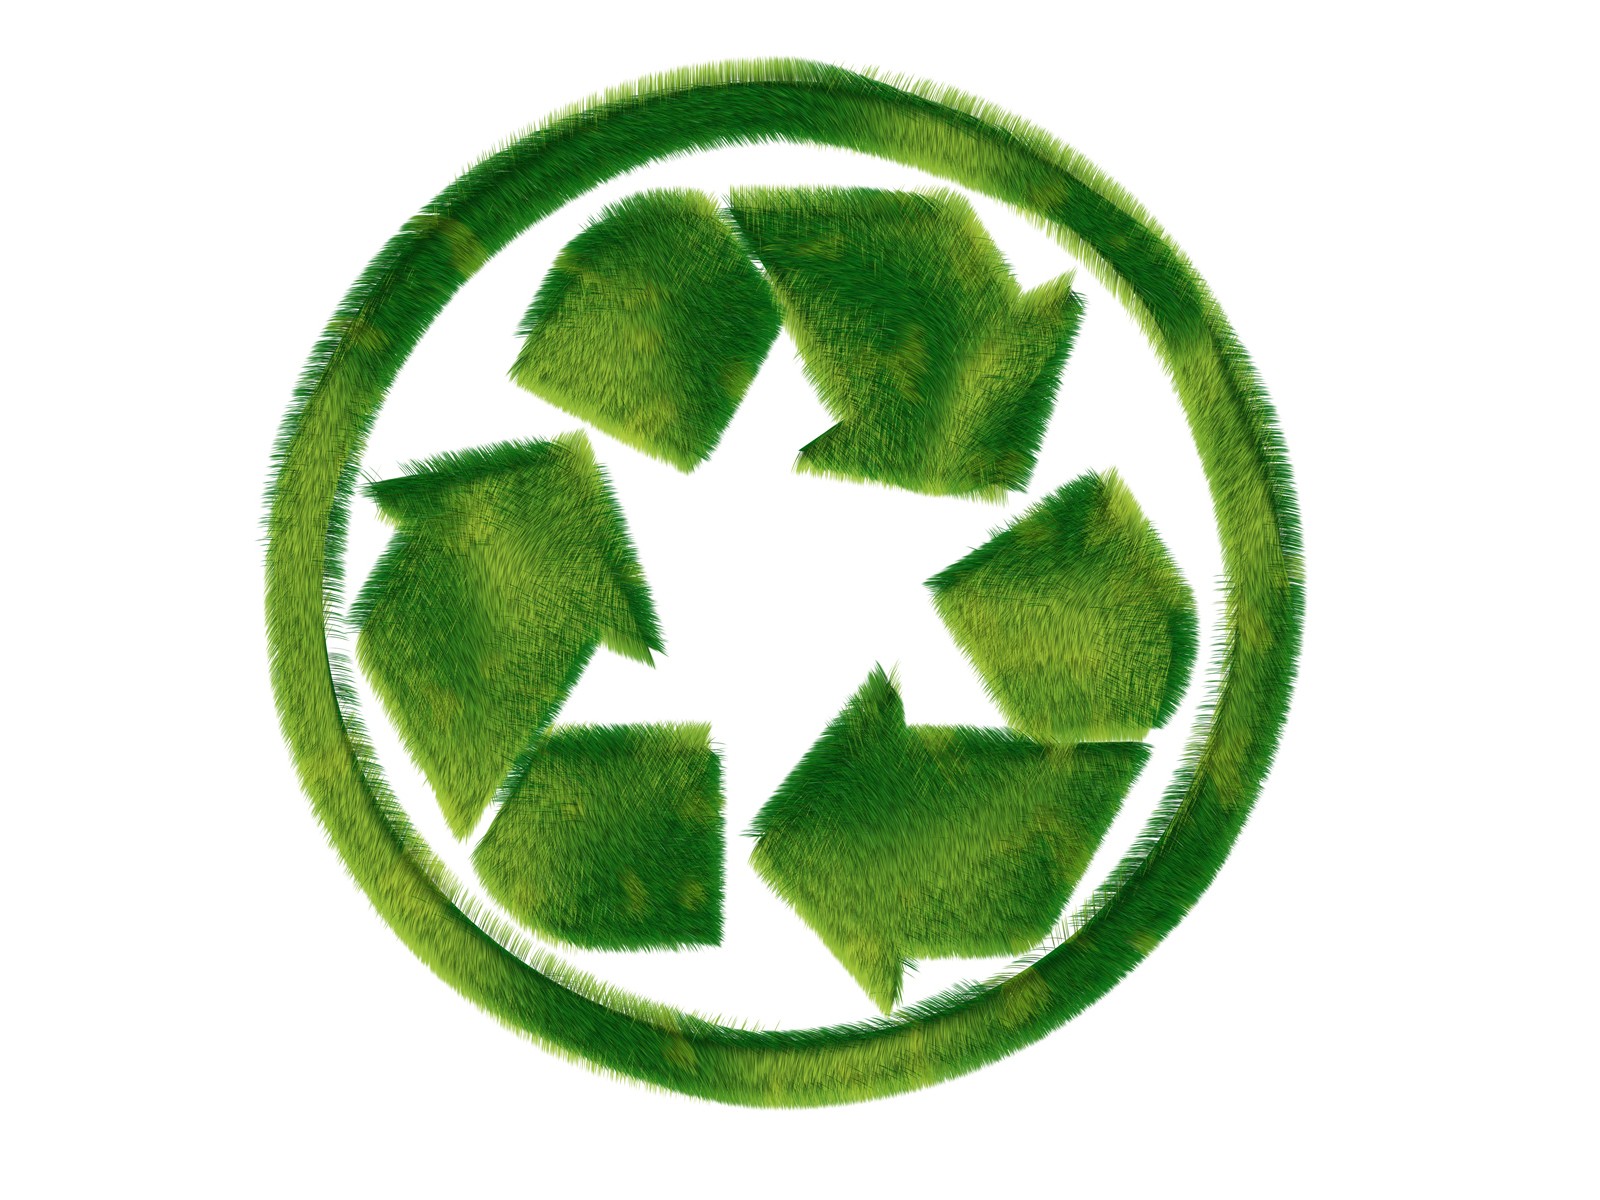 Eco Friendly Symbols Symbols And Environmental Green Icons 1600x1200 NO.11 Desktop Wallpaper